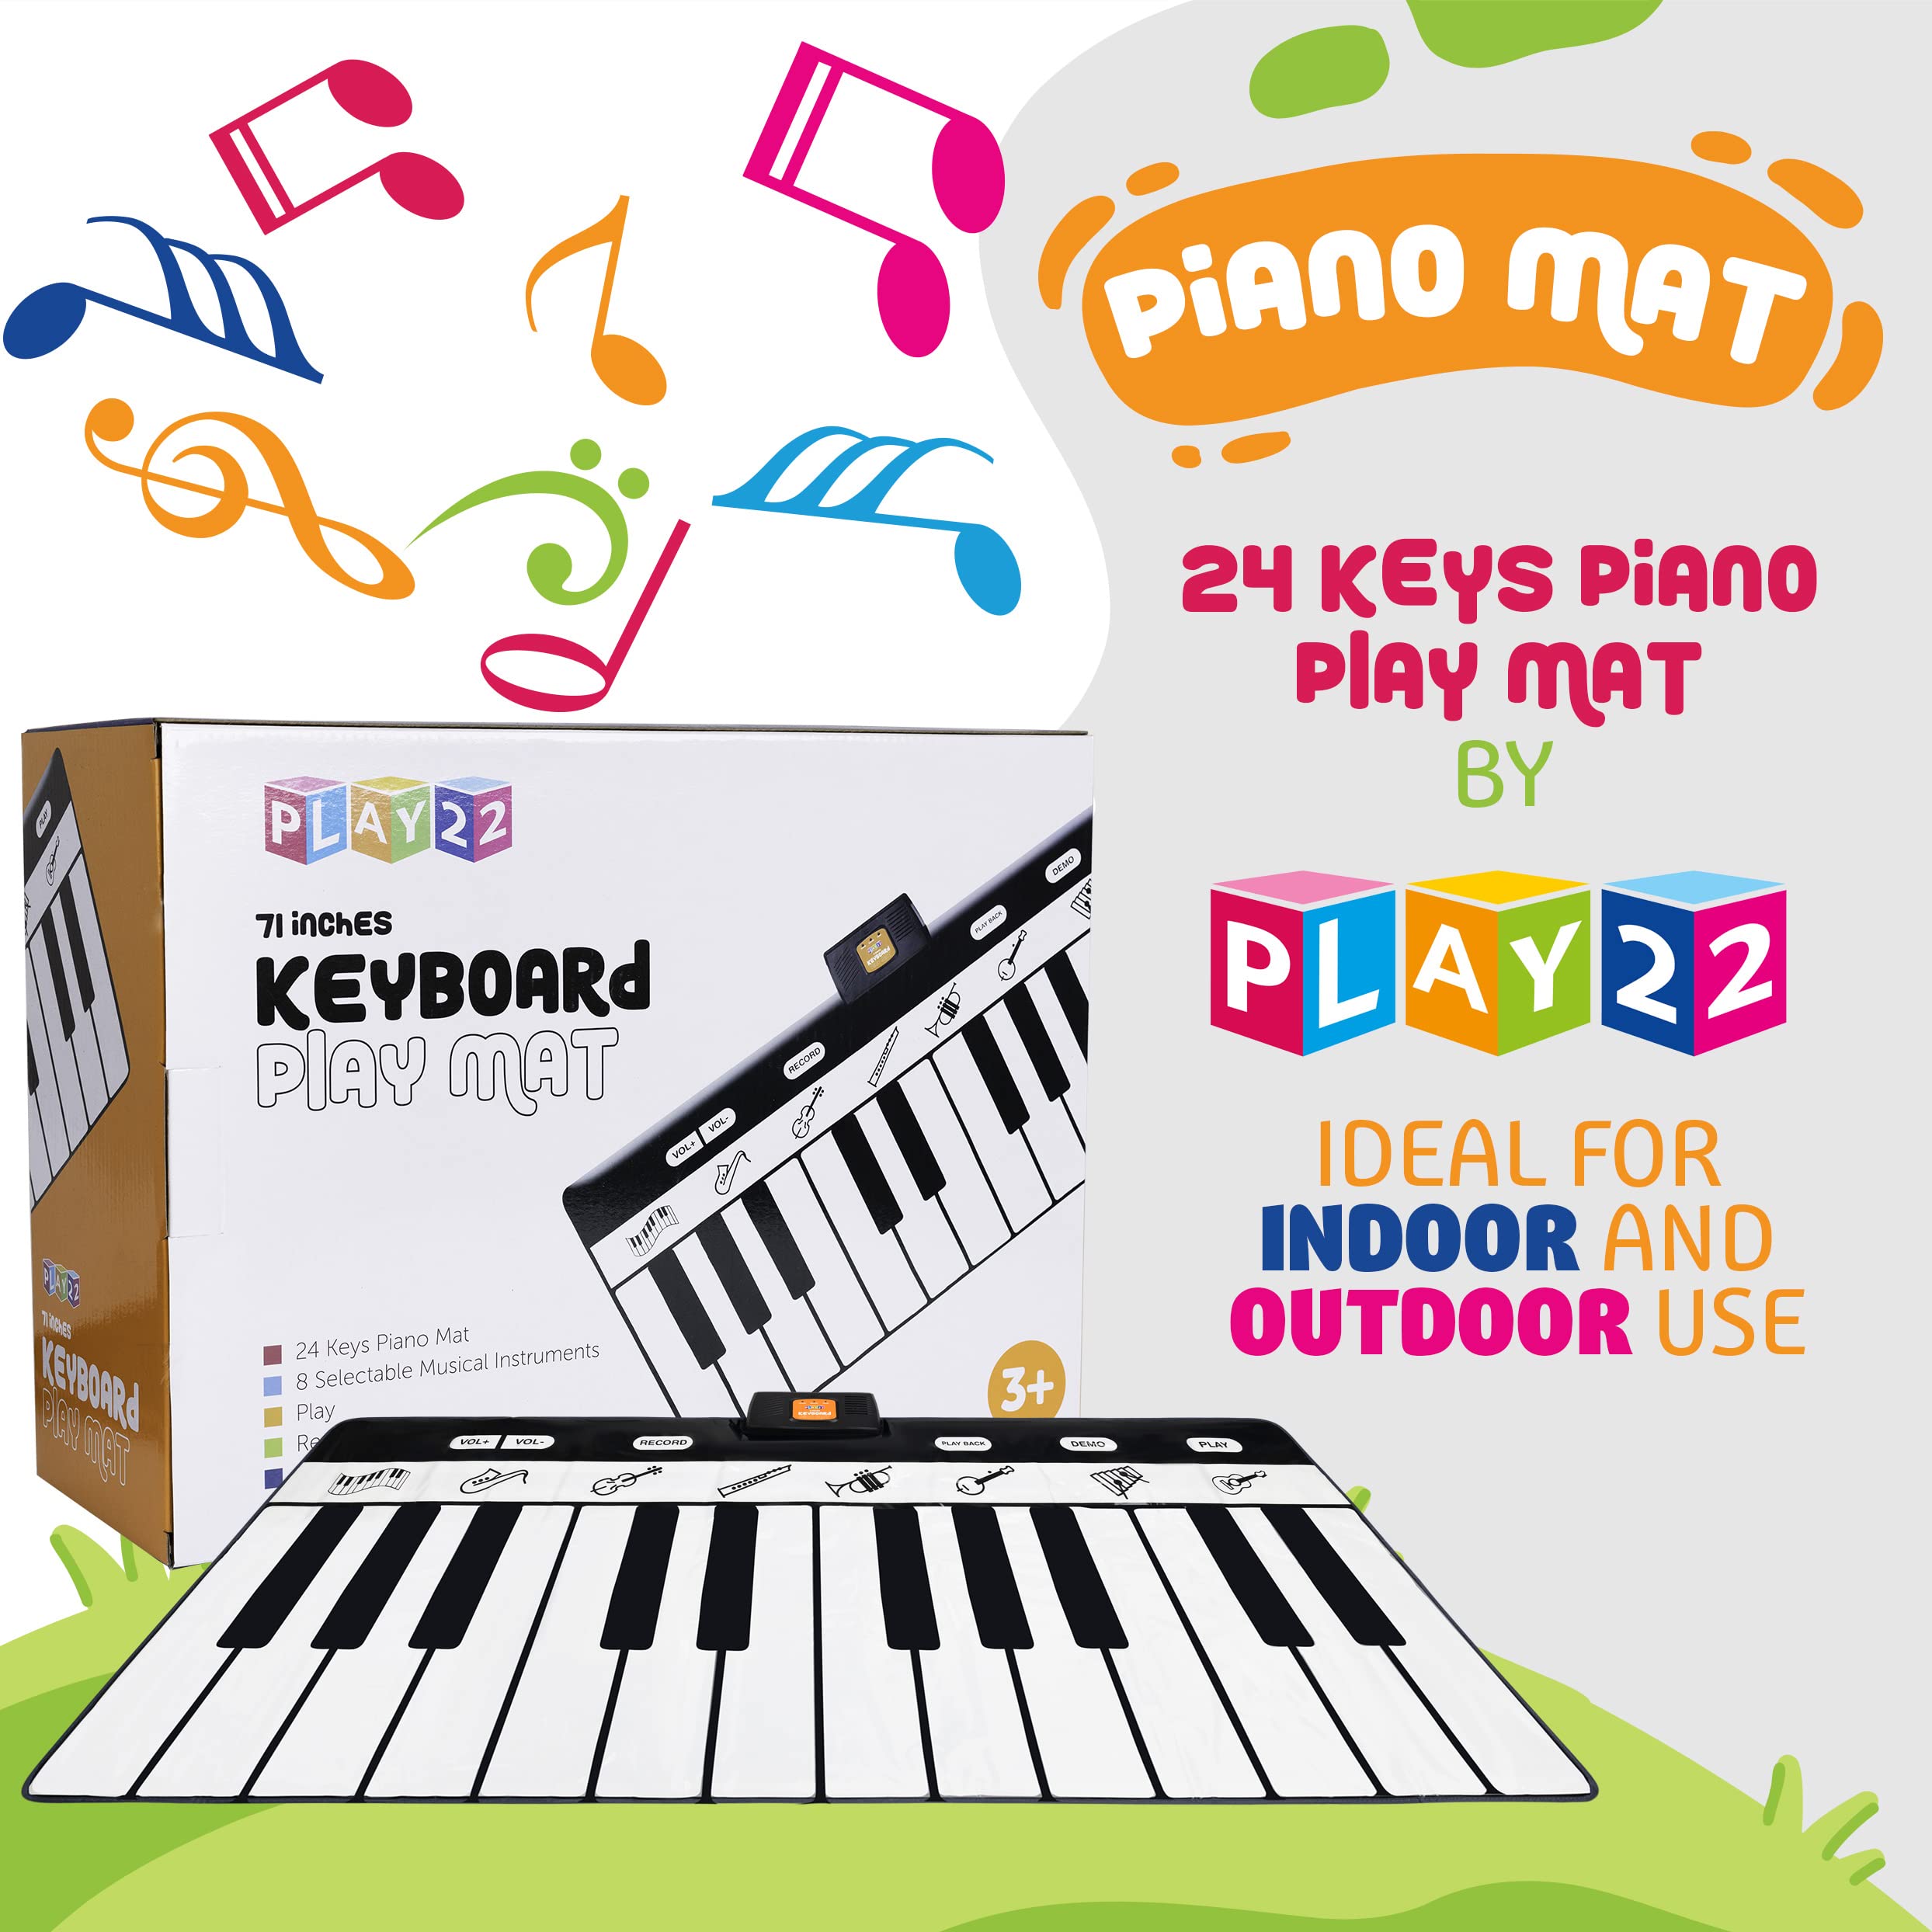 Play22 Keyboard Playmat 71